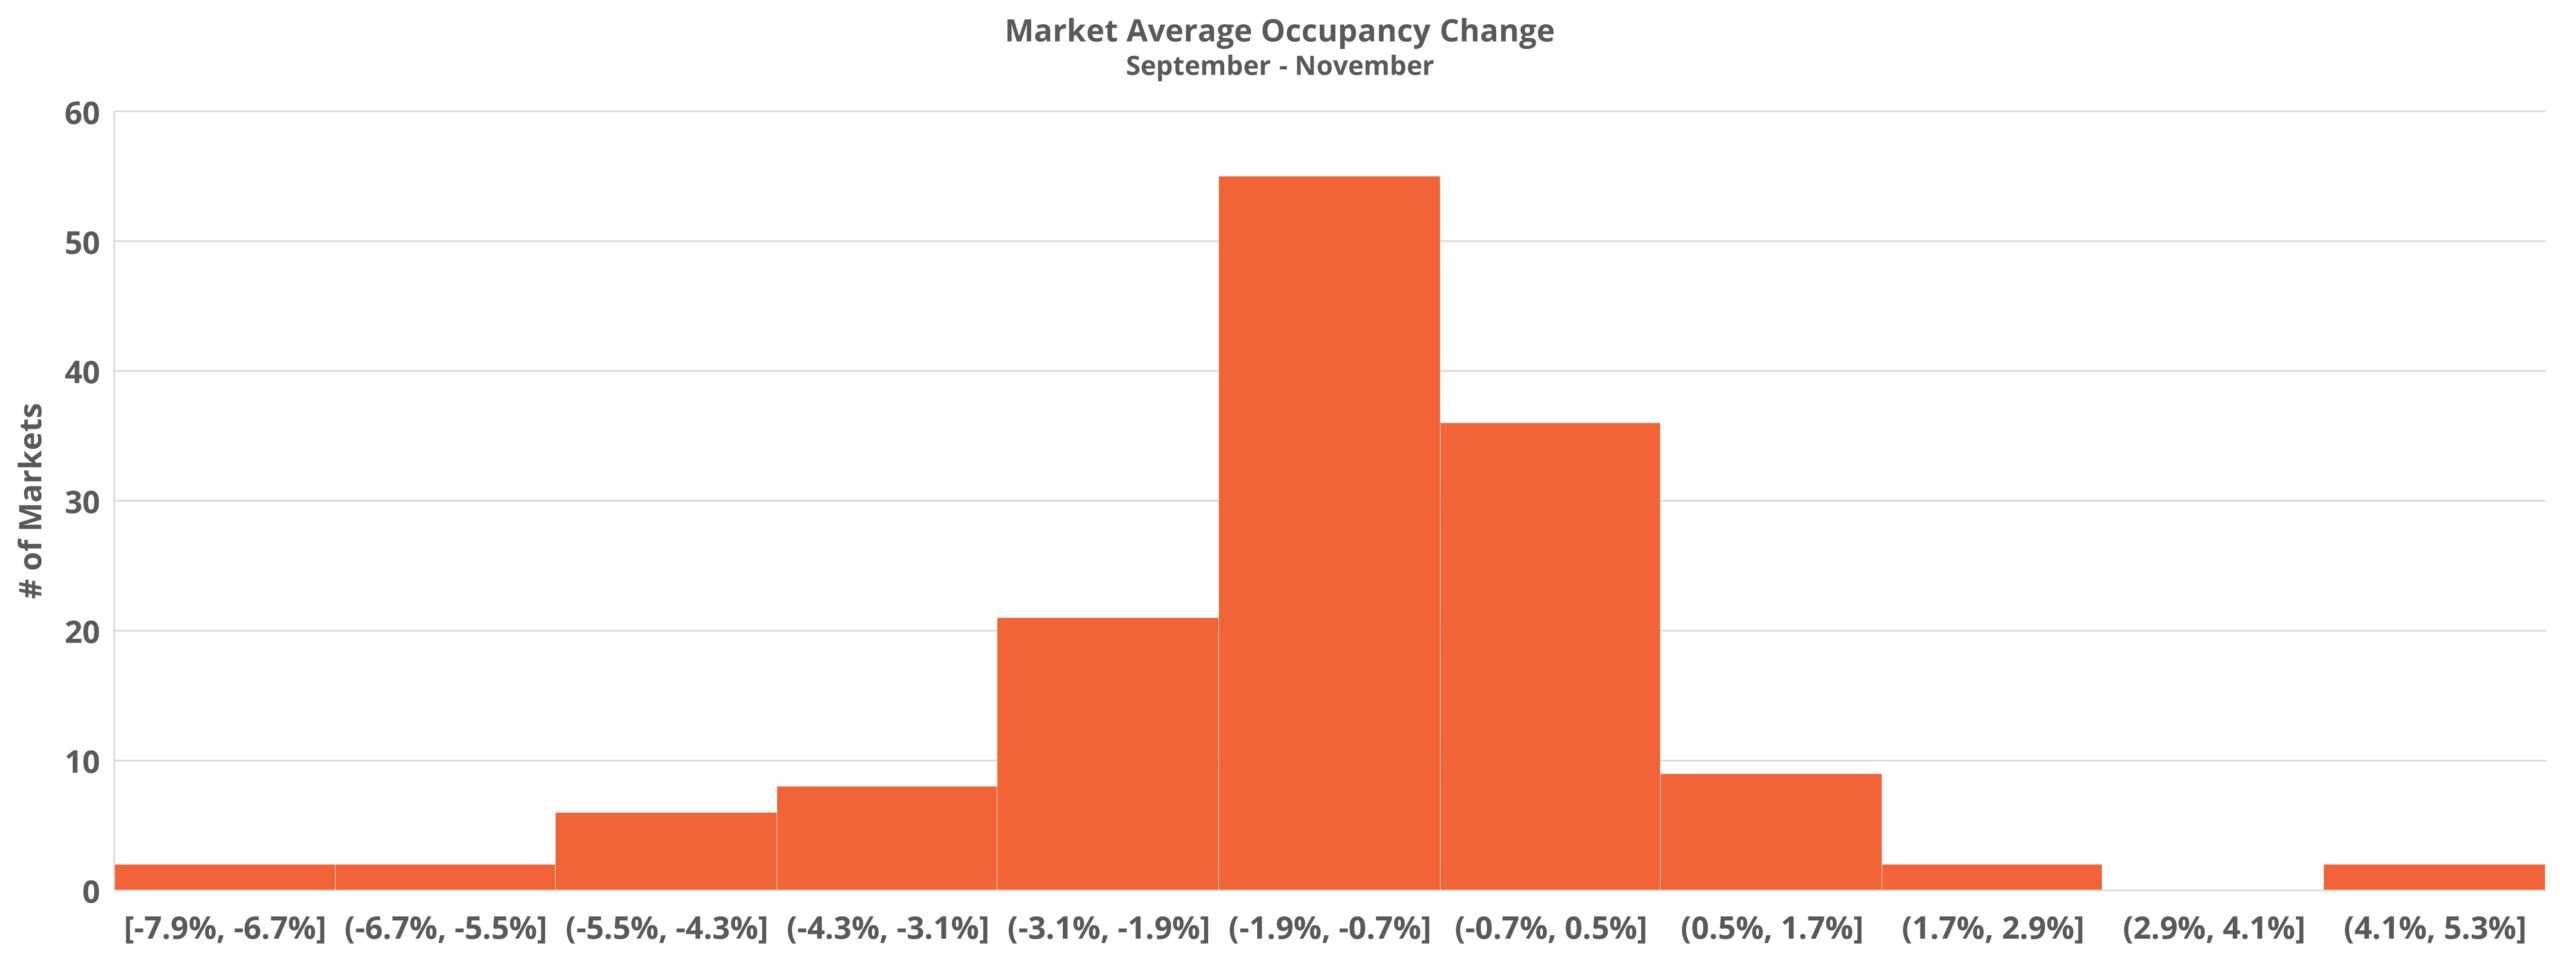 Market Average Occupancy Change